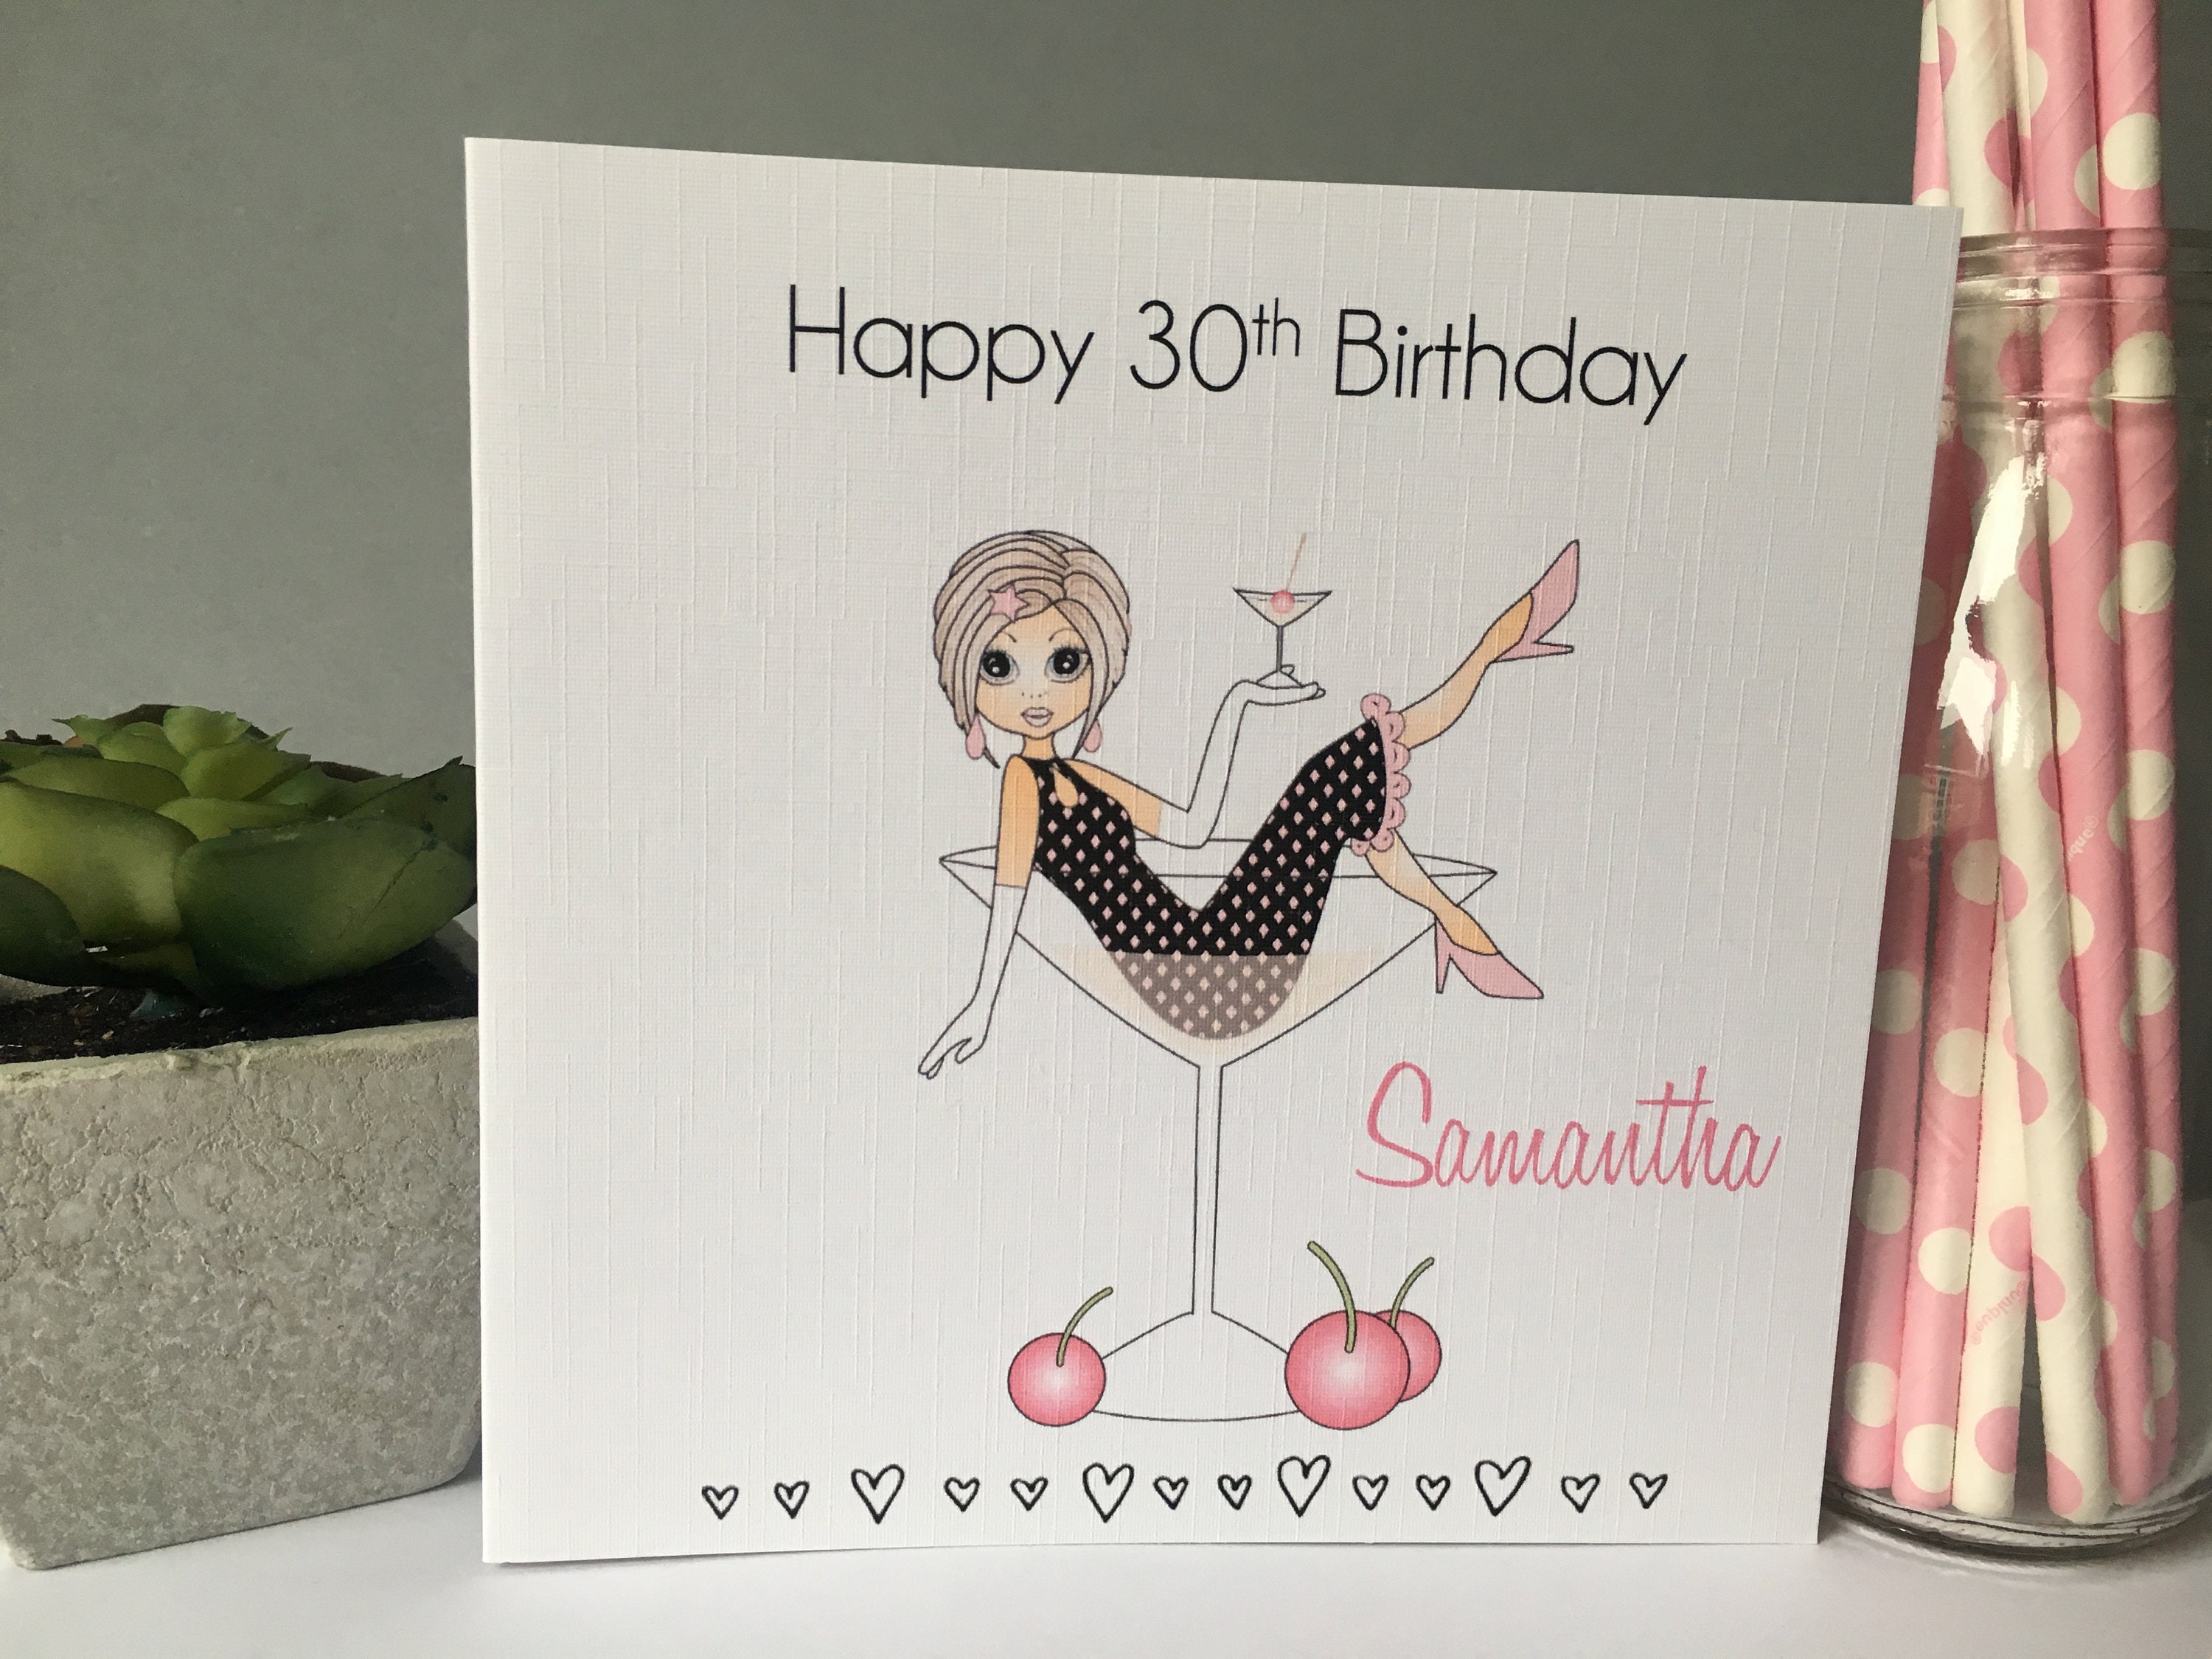 Fun Handmade Birthday Cards for Girls